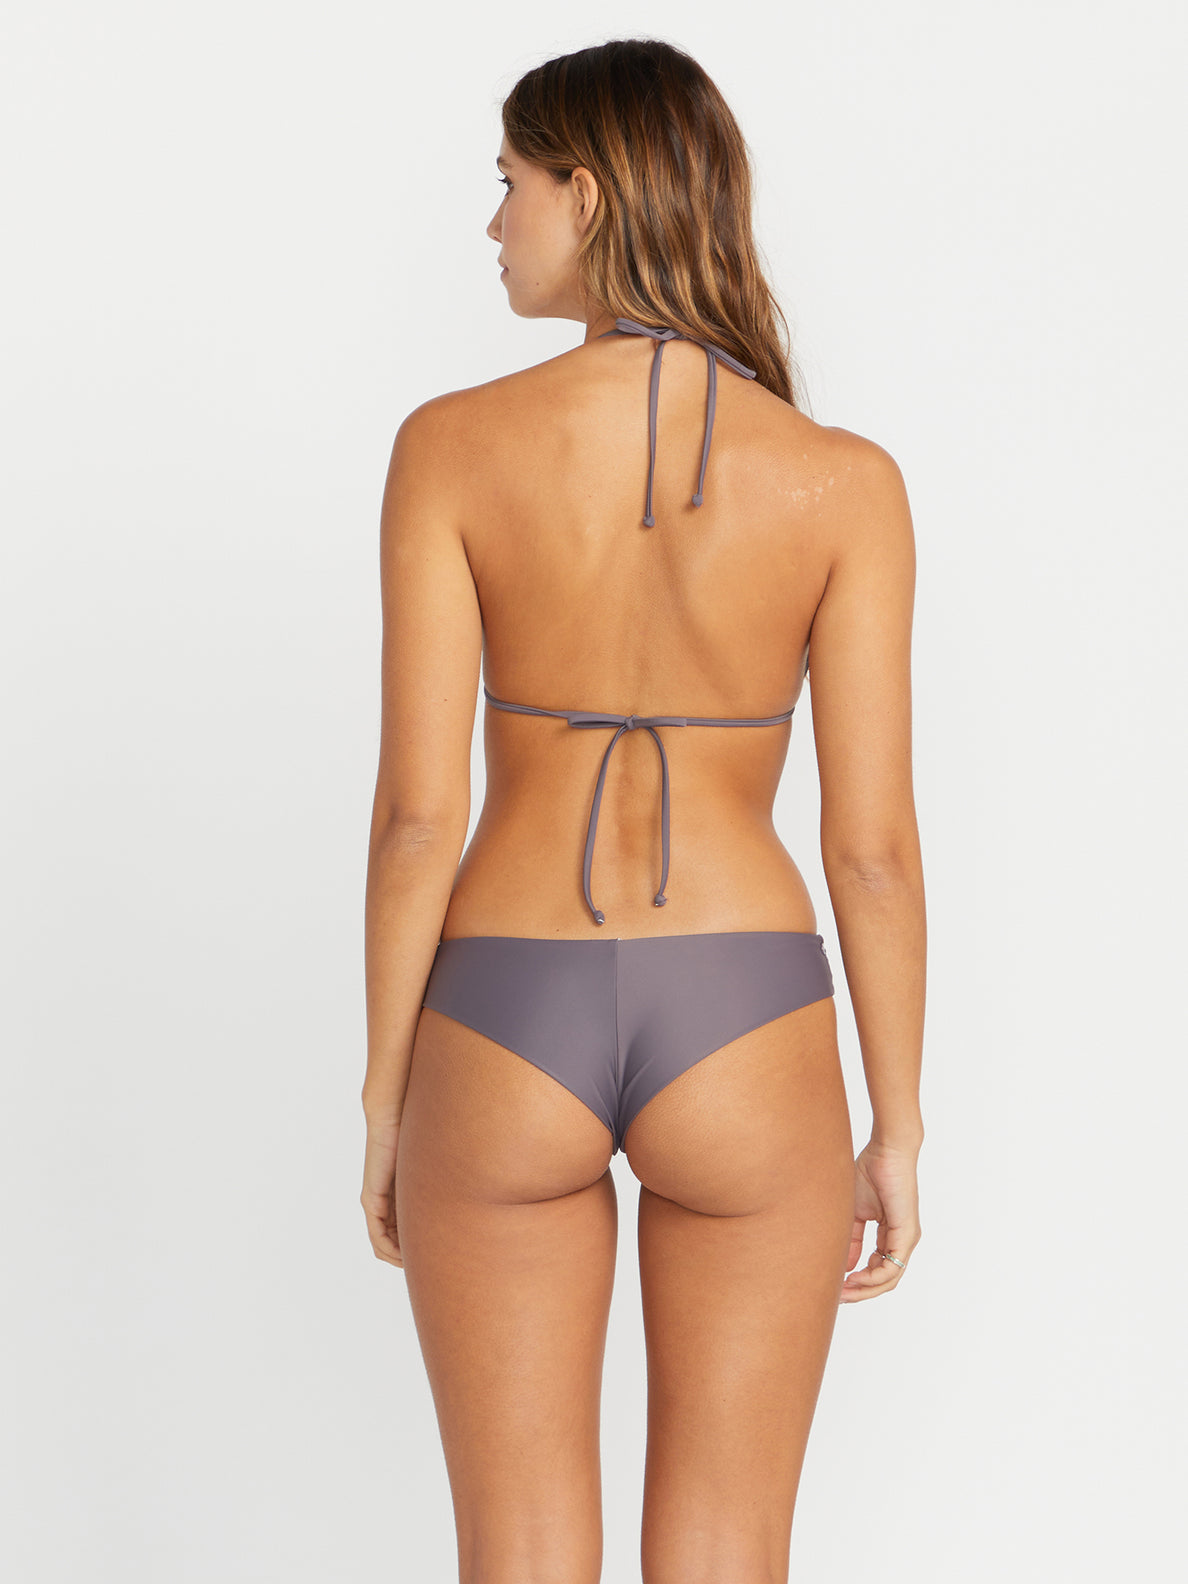 Simply Solid Slide Triangle Bikini Top - Slate Grey (O1412308_SLT) [B]